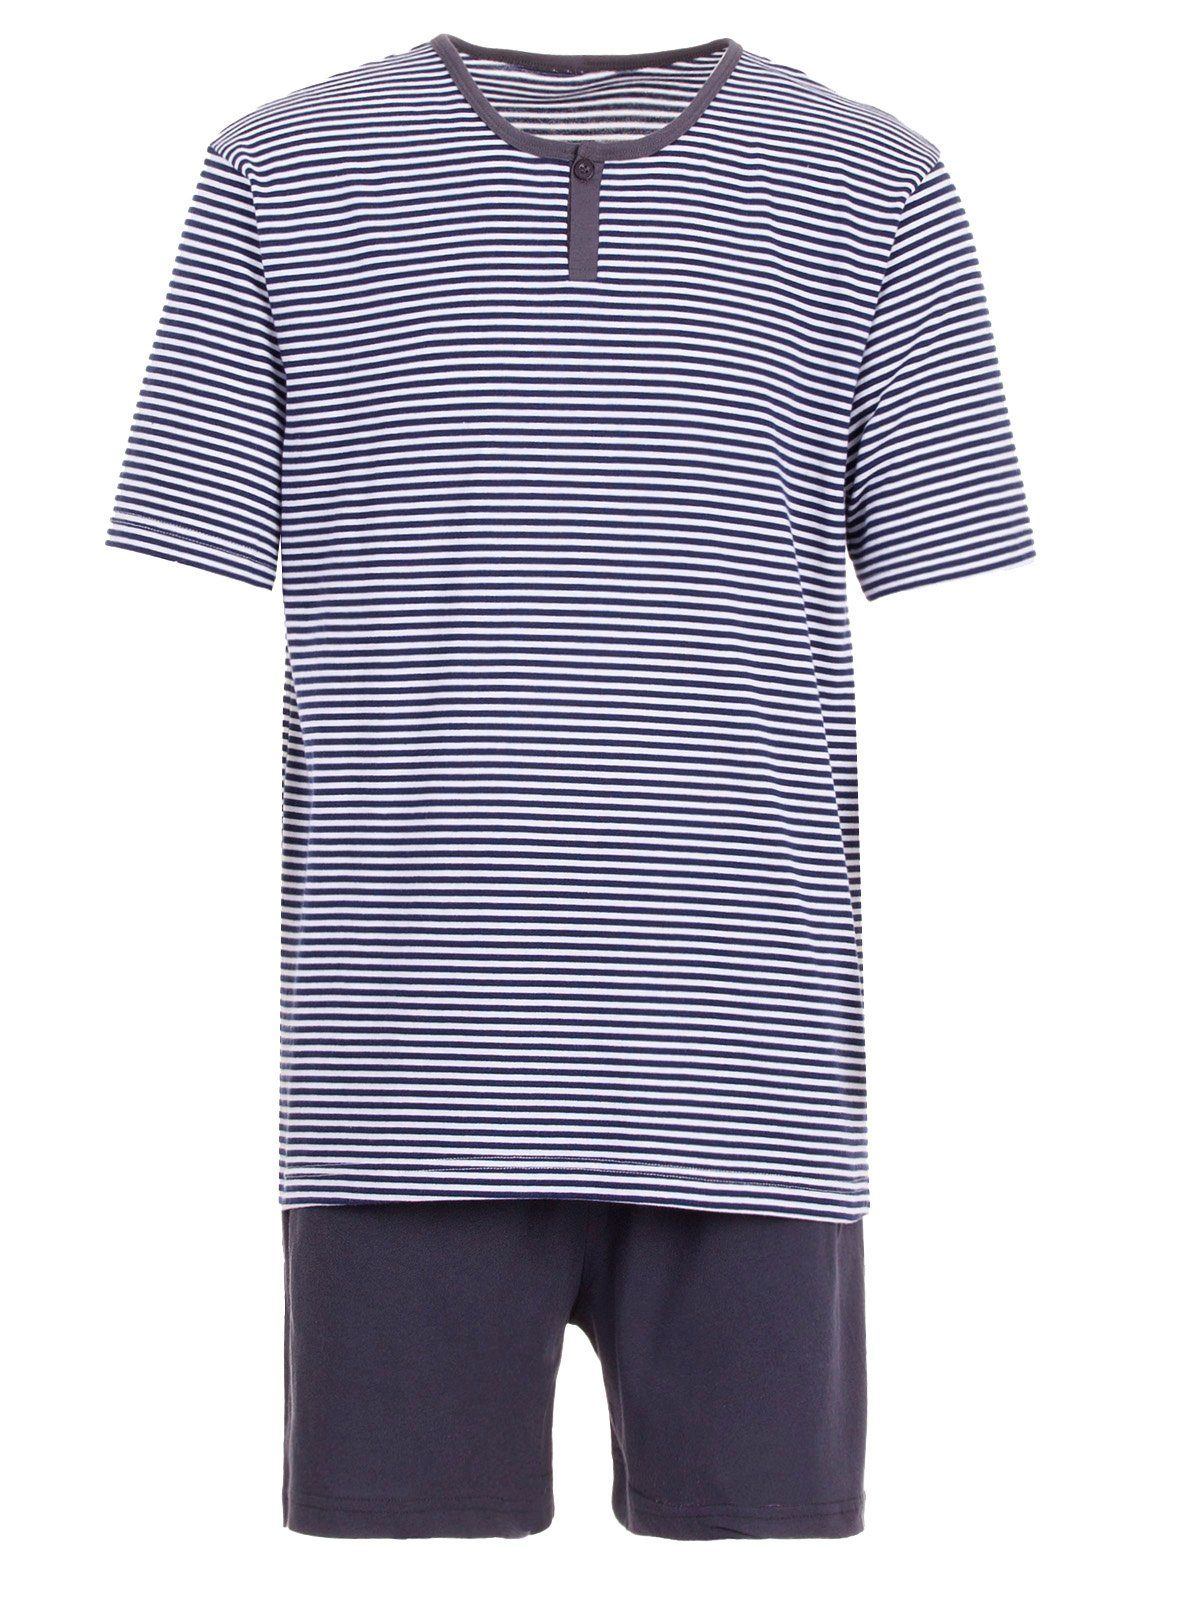 Henry Terre Schlafanzug Pyjama Set Shorty - Gestreift mit Knopf navy